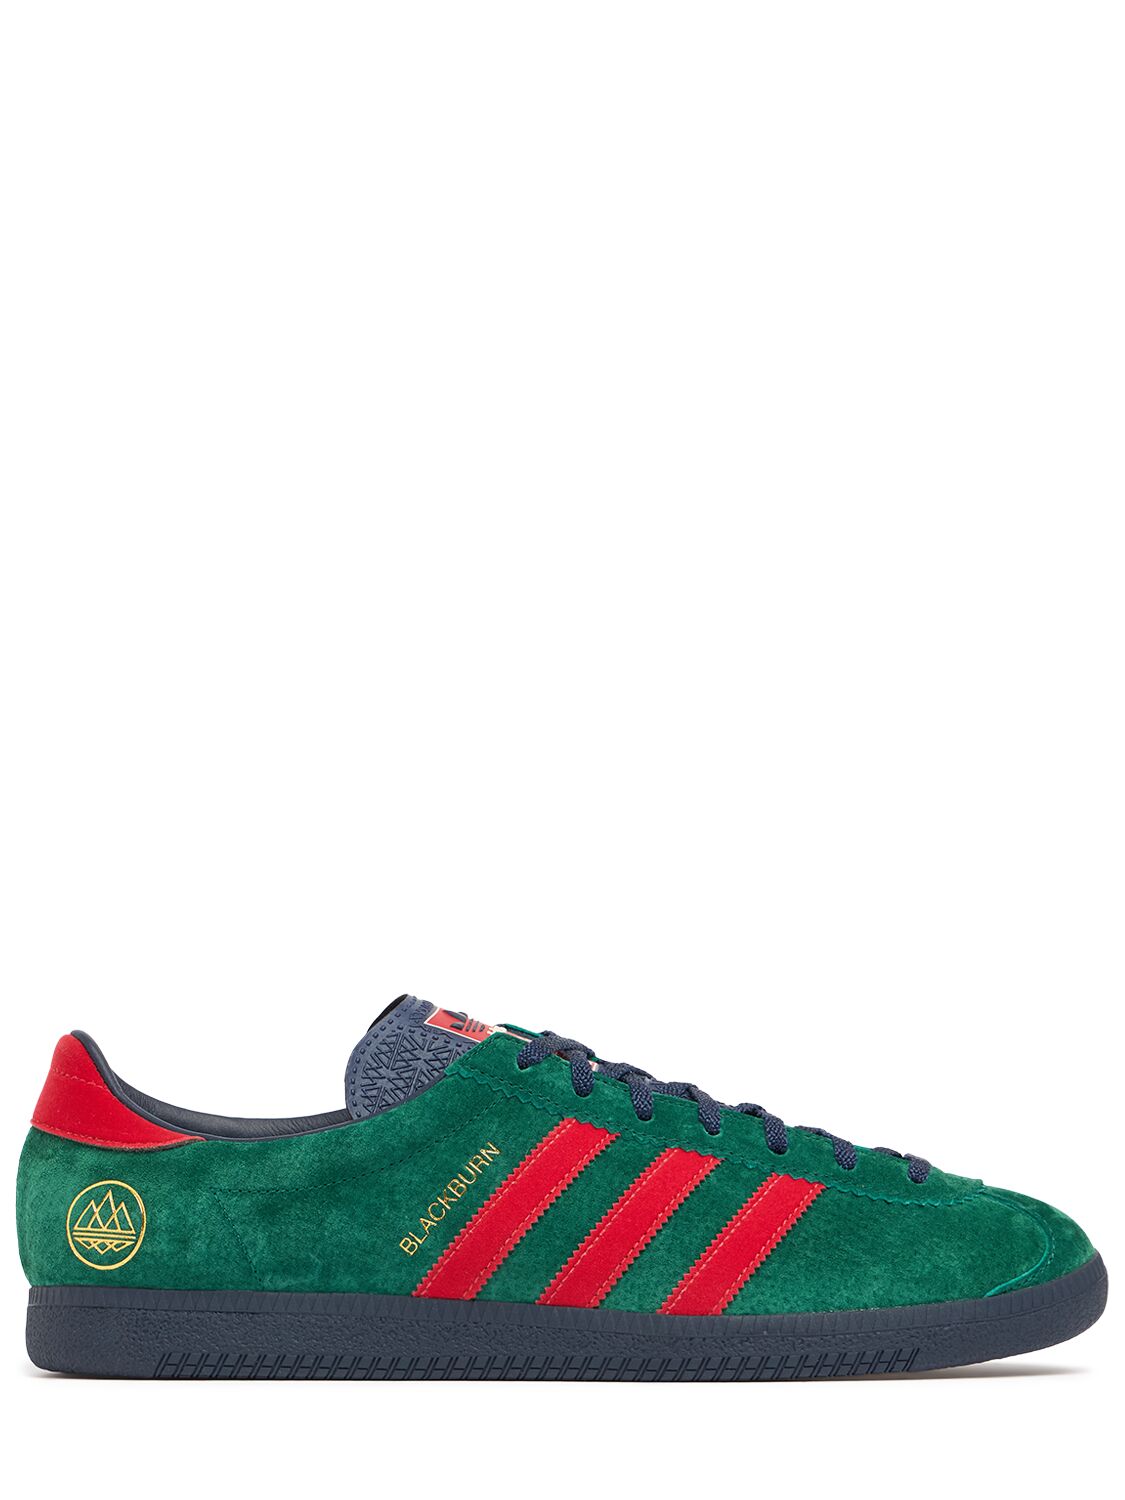 Adidas Originals Blackburn Spezial Sneakers Green / Red